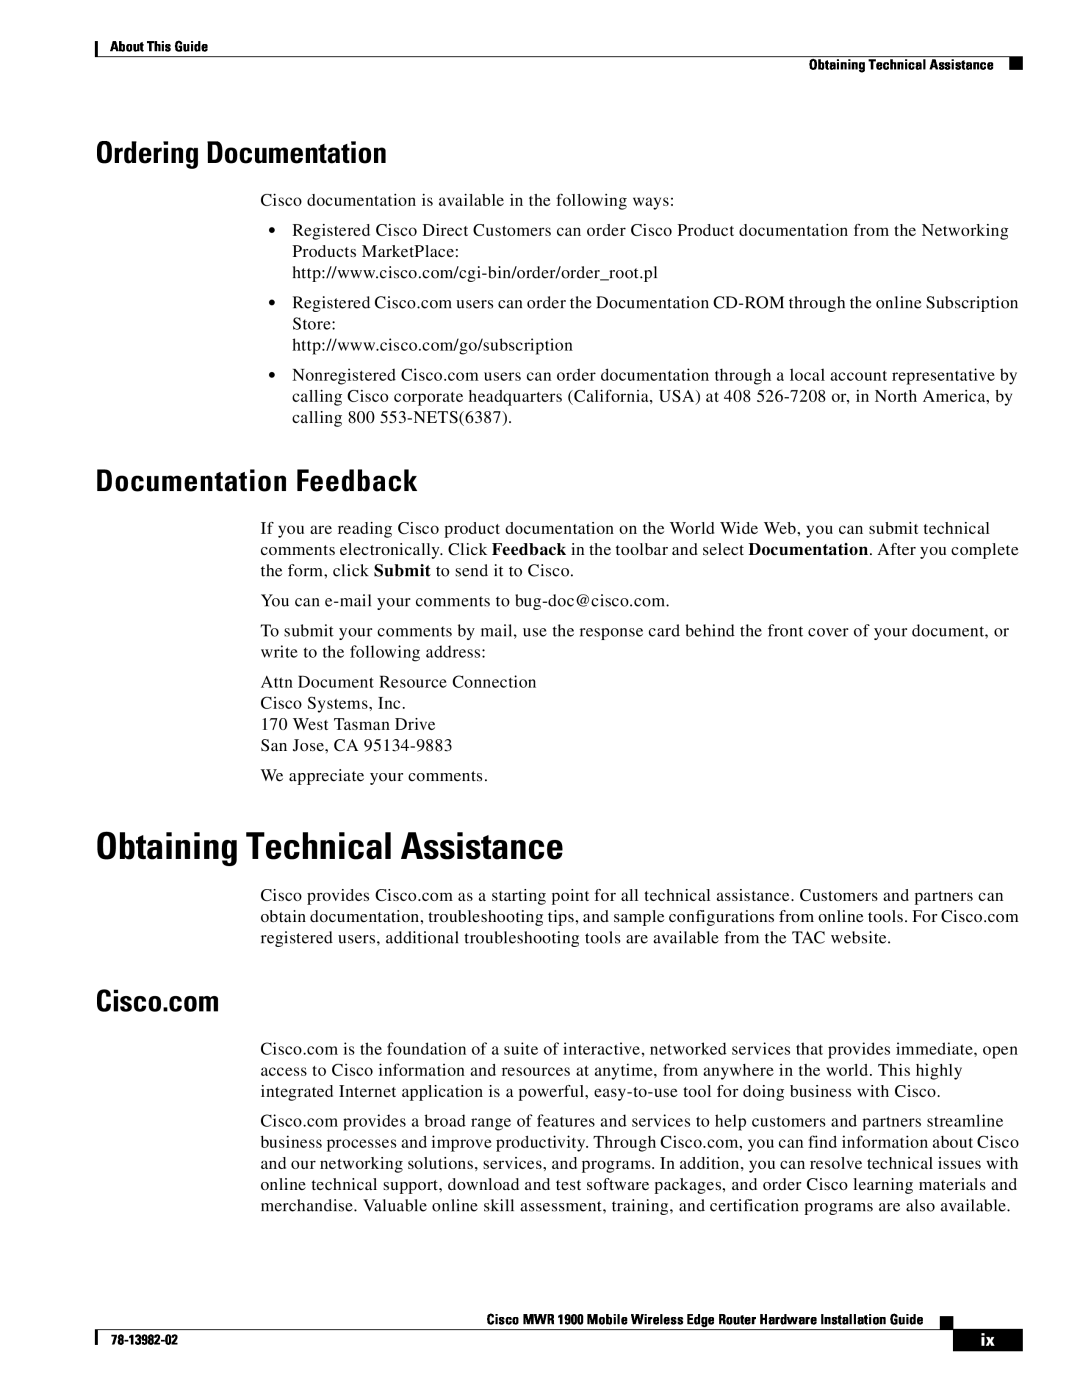 Cisco Systems MWR 1900 manual Obtaining Technical Assistance, Ordering Documentation, Documentation Feedback, Cisco.com 